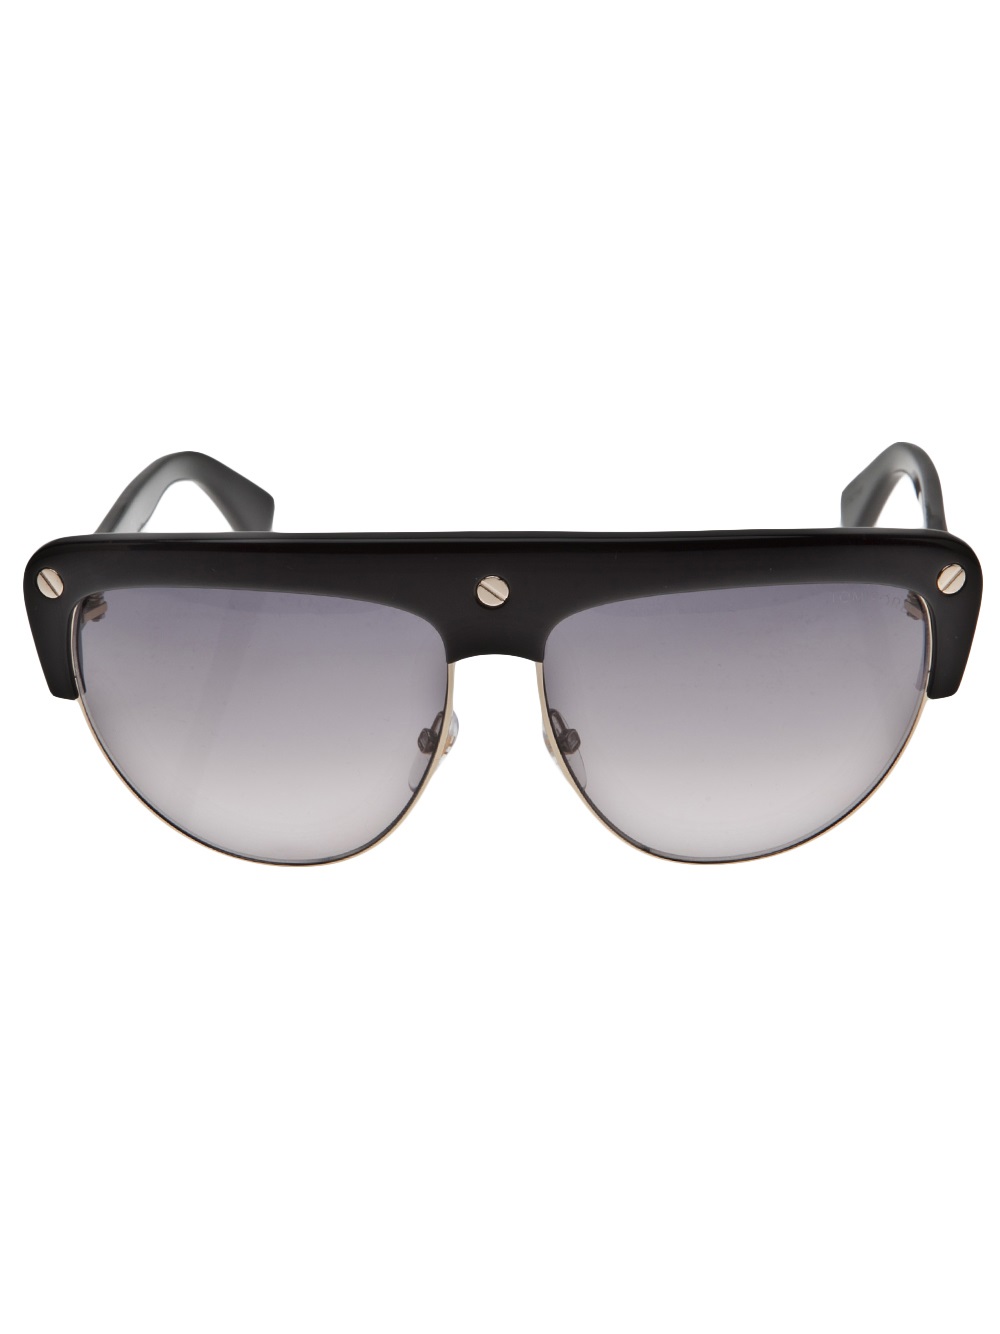 Tom ford black frame sunglasses #9